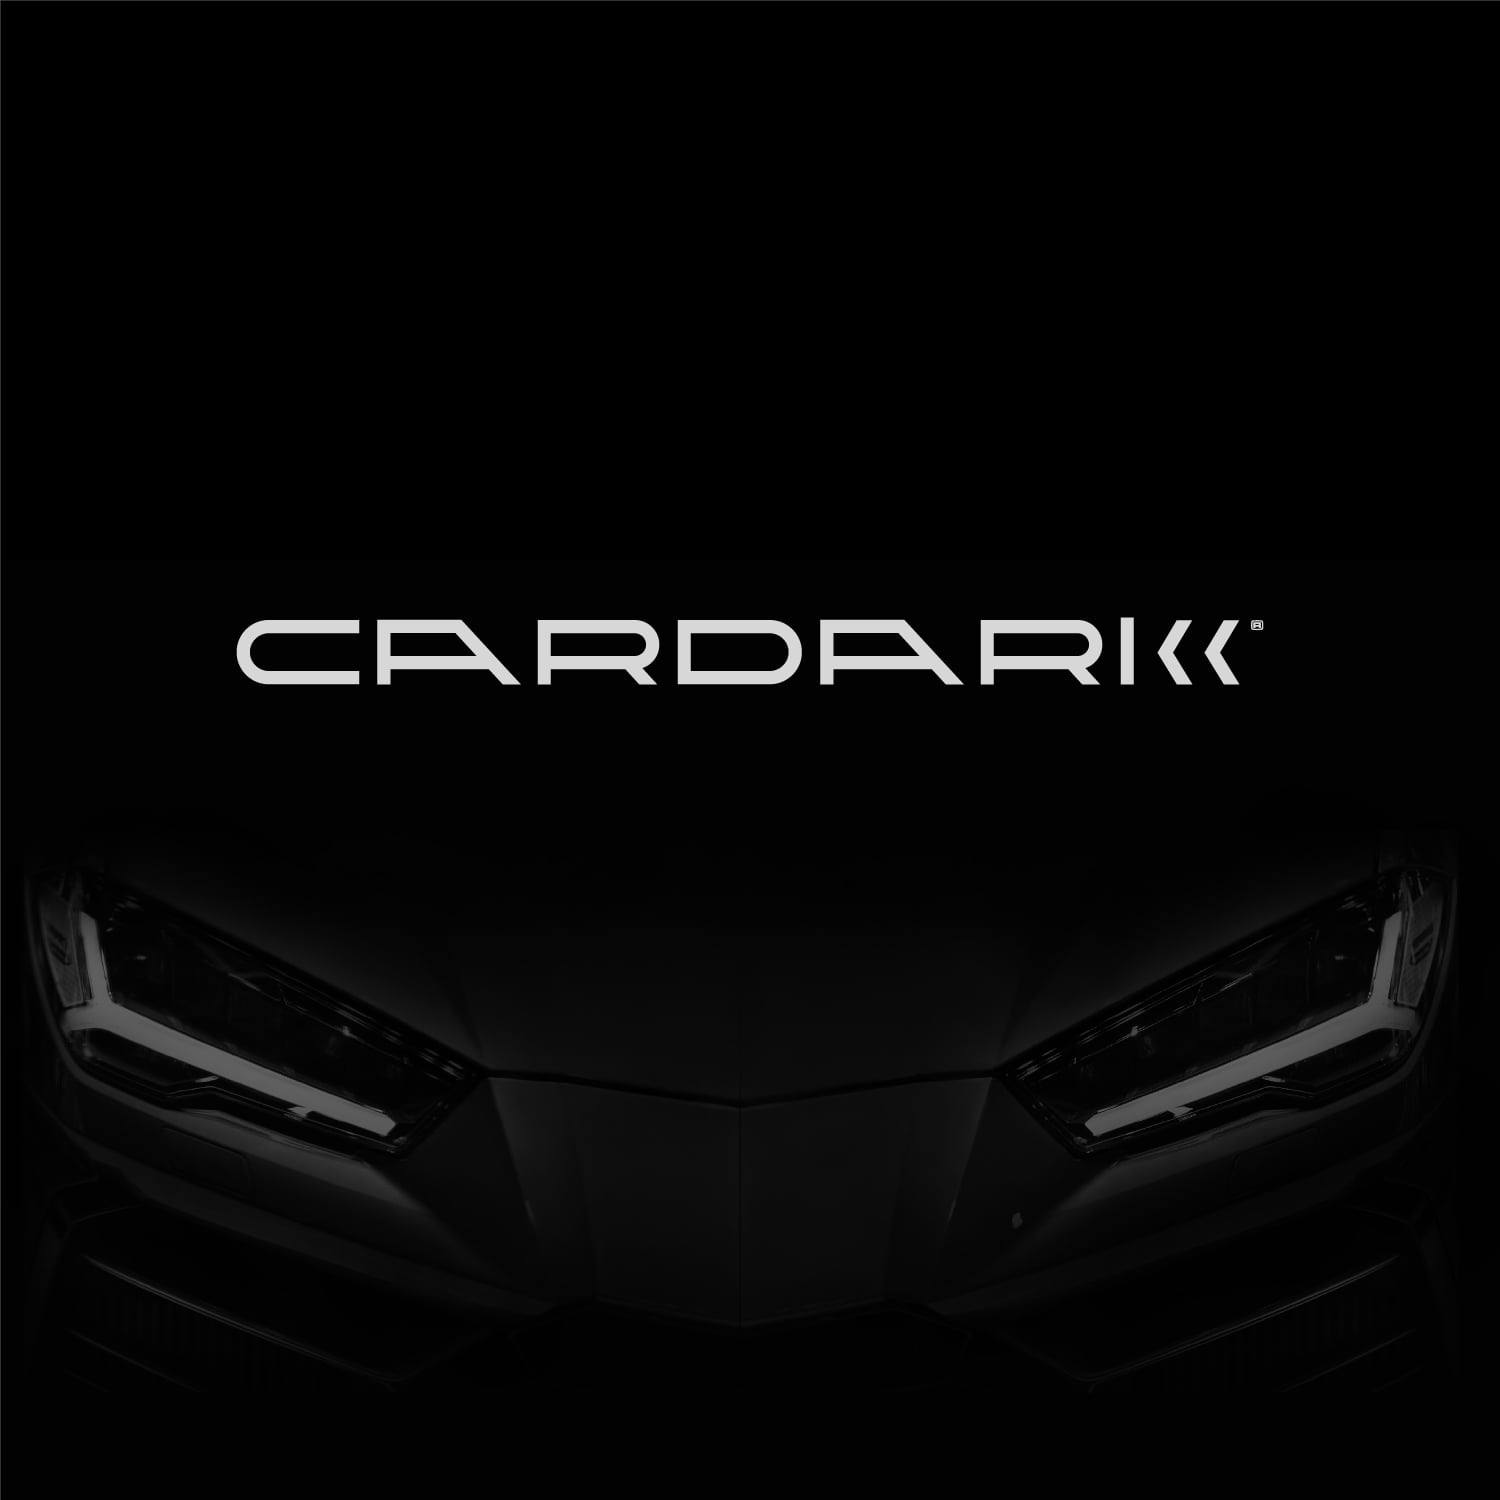 CarDark logo black background with a car.